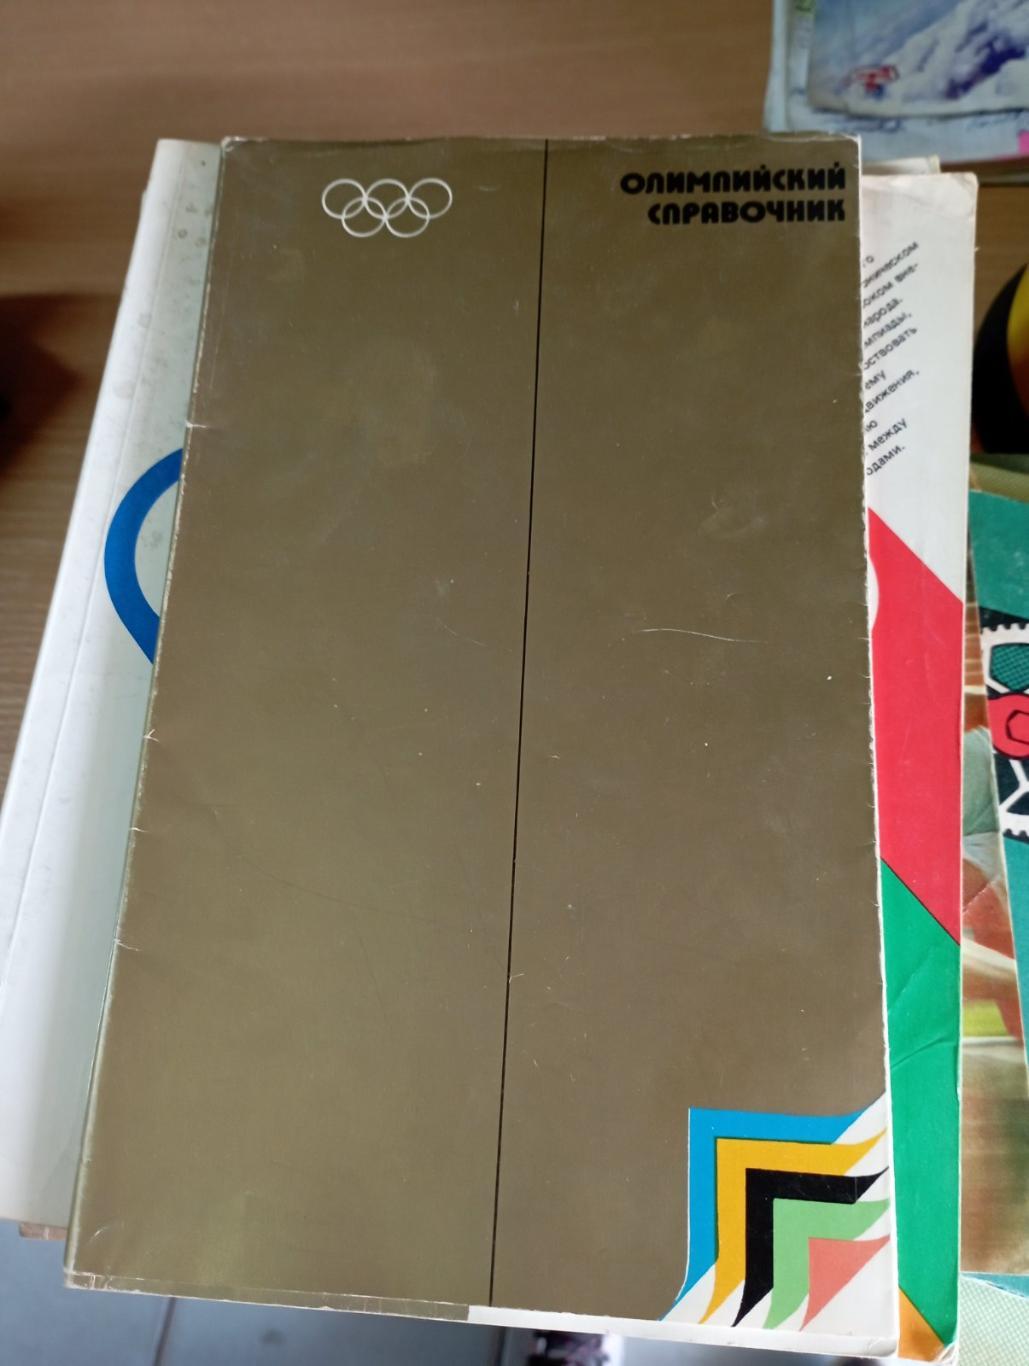 Олимпийский справочник 1980 г